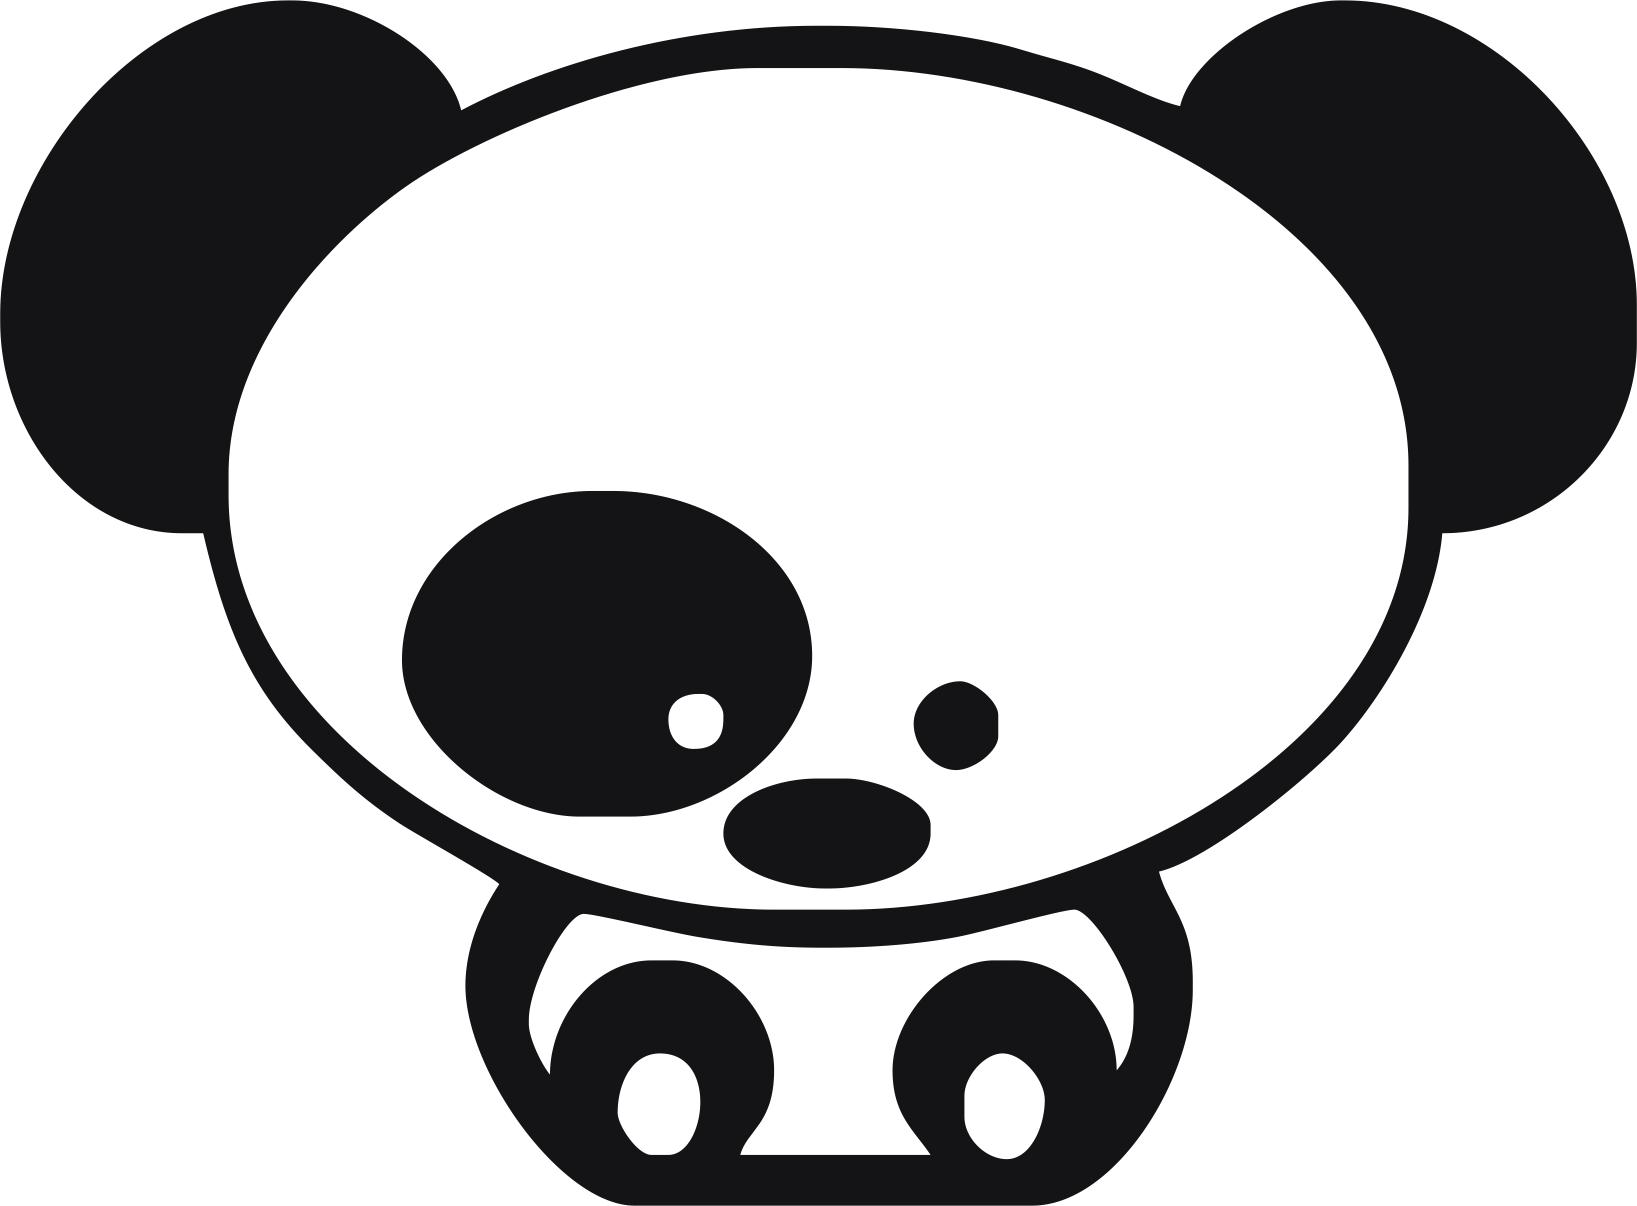 Cute Panda Sticker Cdr File Free Download Vectors File 